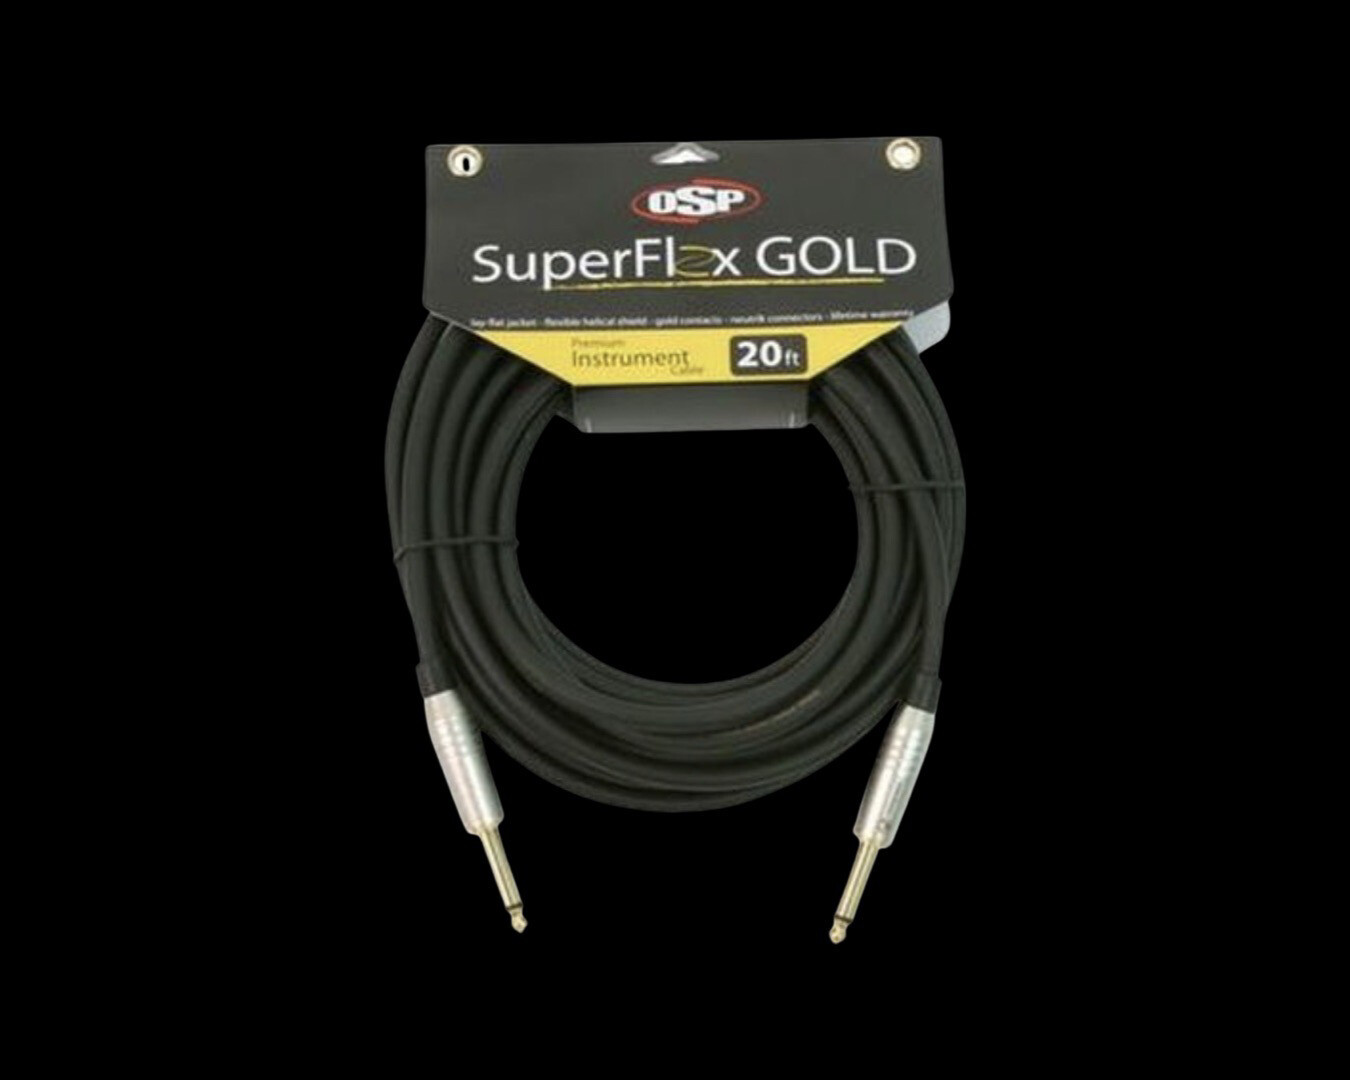 SuperFlex GOLD SFI-20SS Premium Instrument Cable 20' 